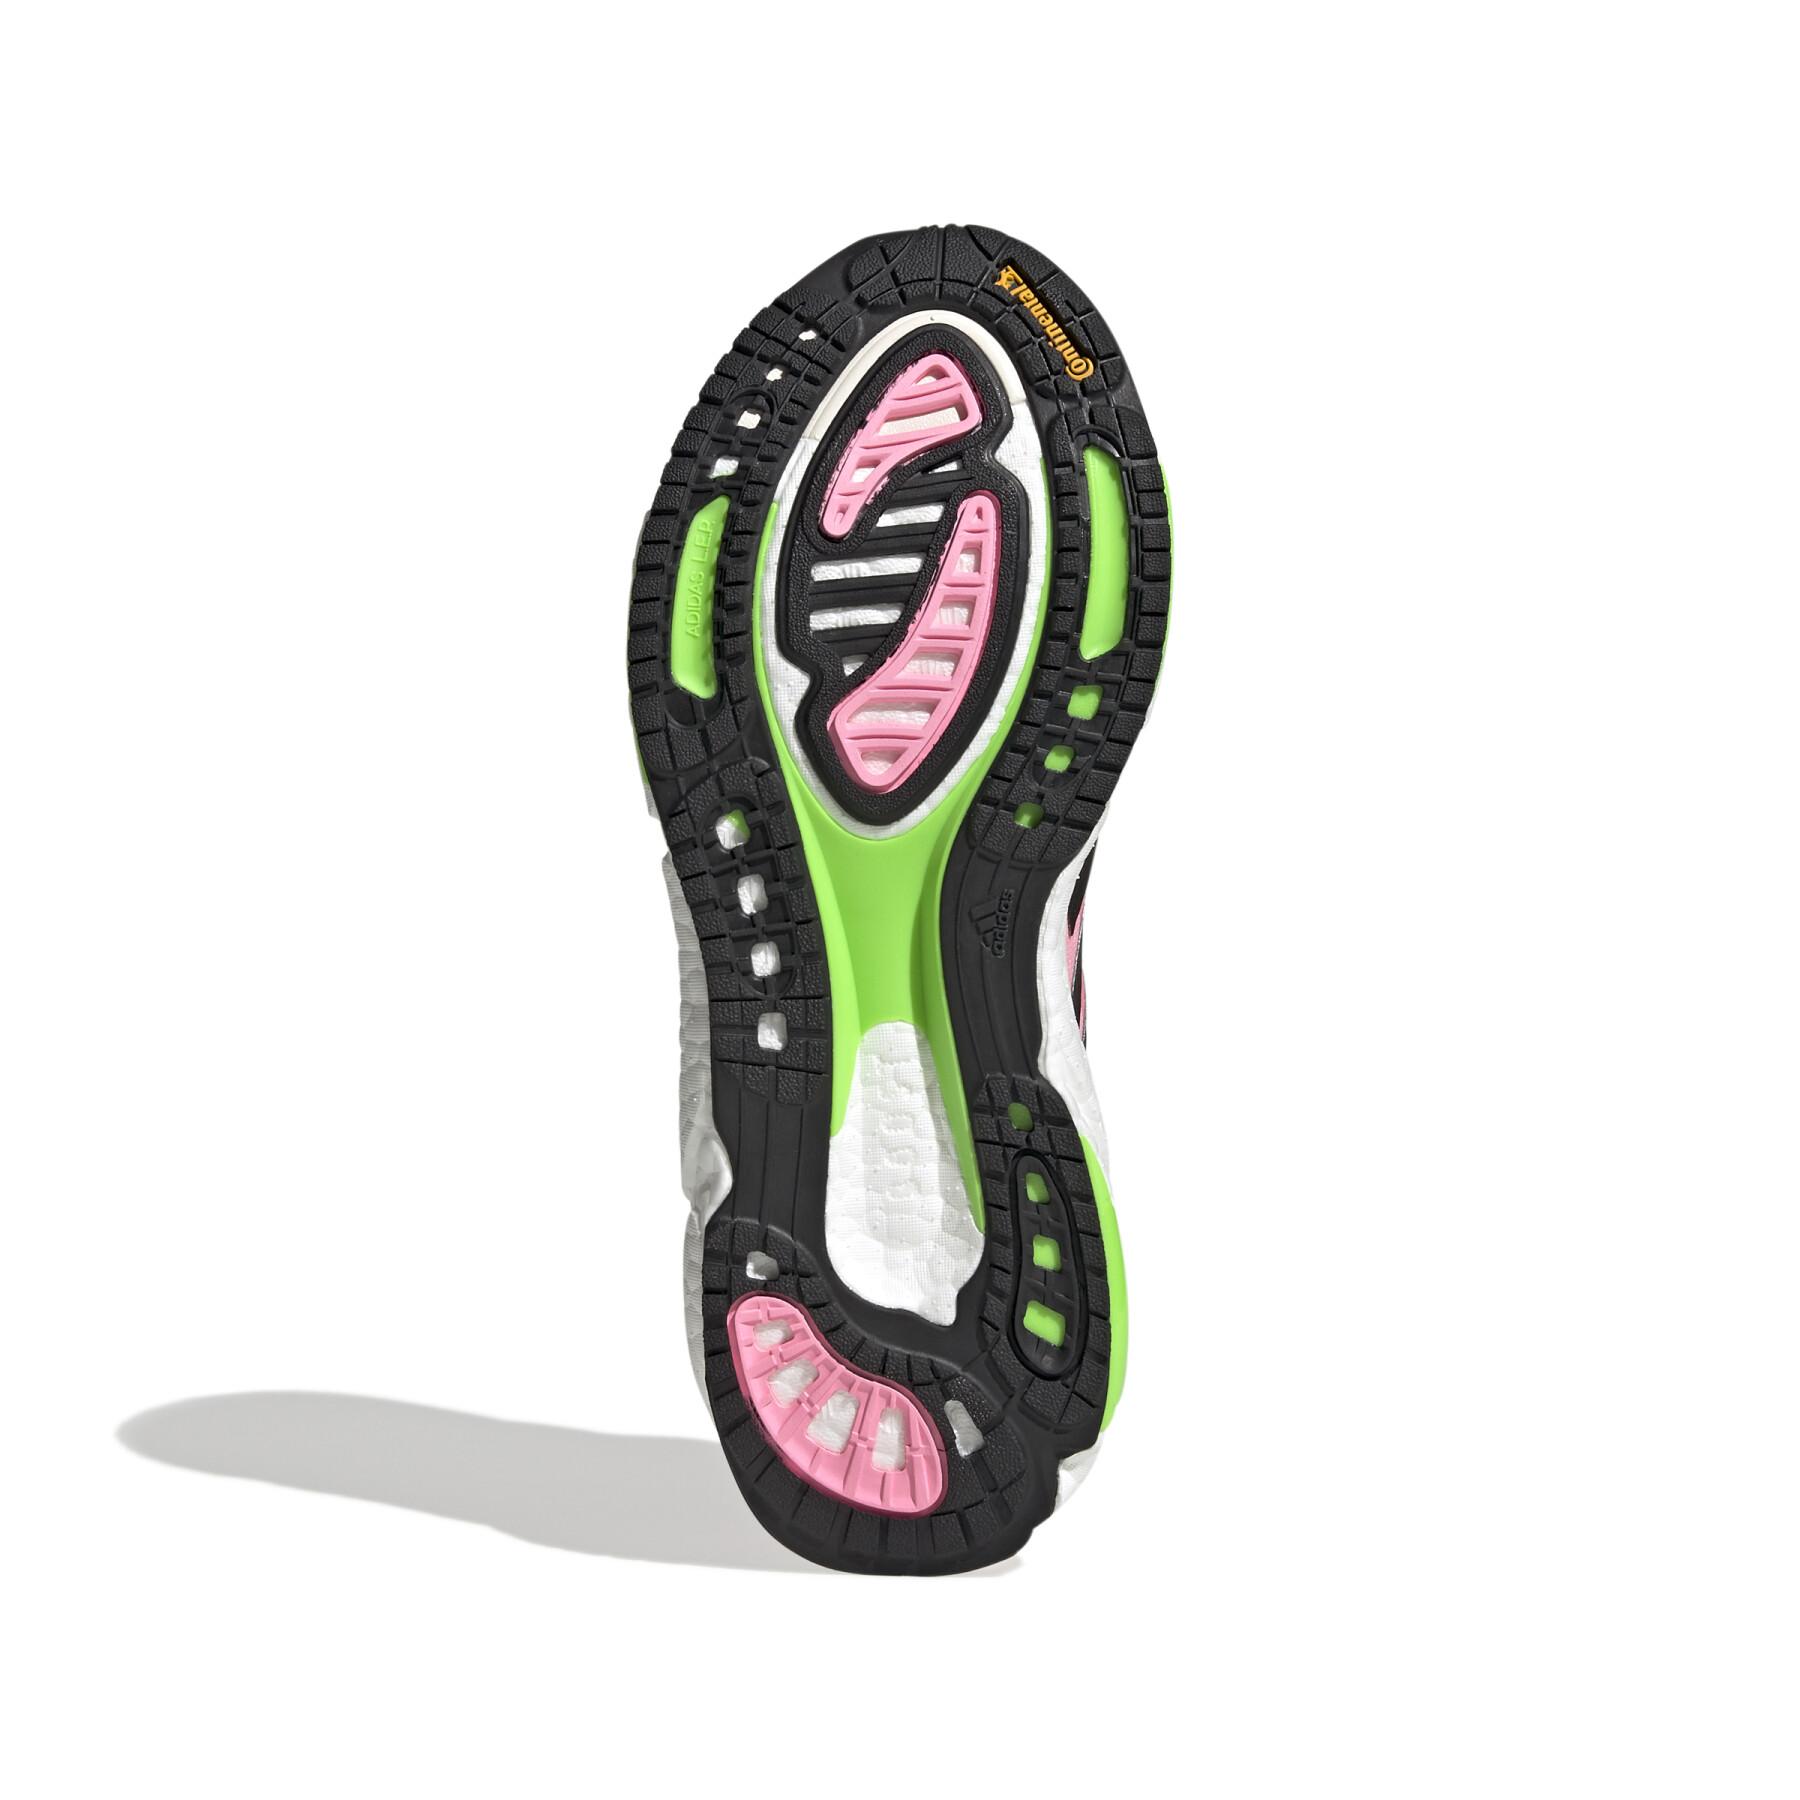 Women's running shoes adidas Solar boost 4